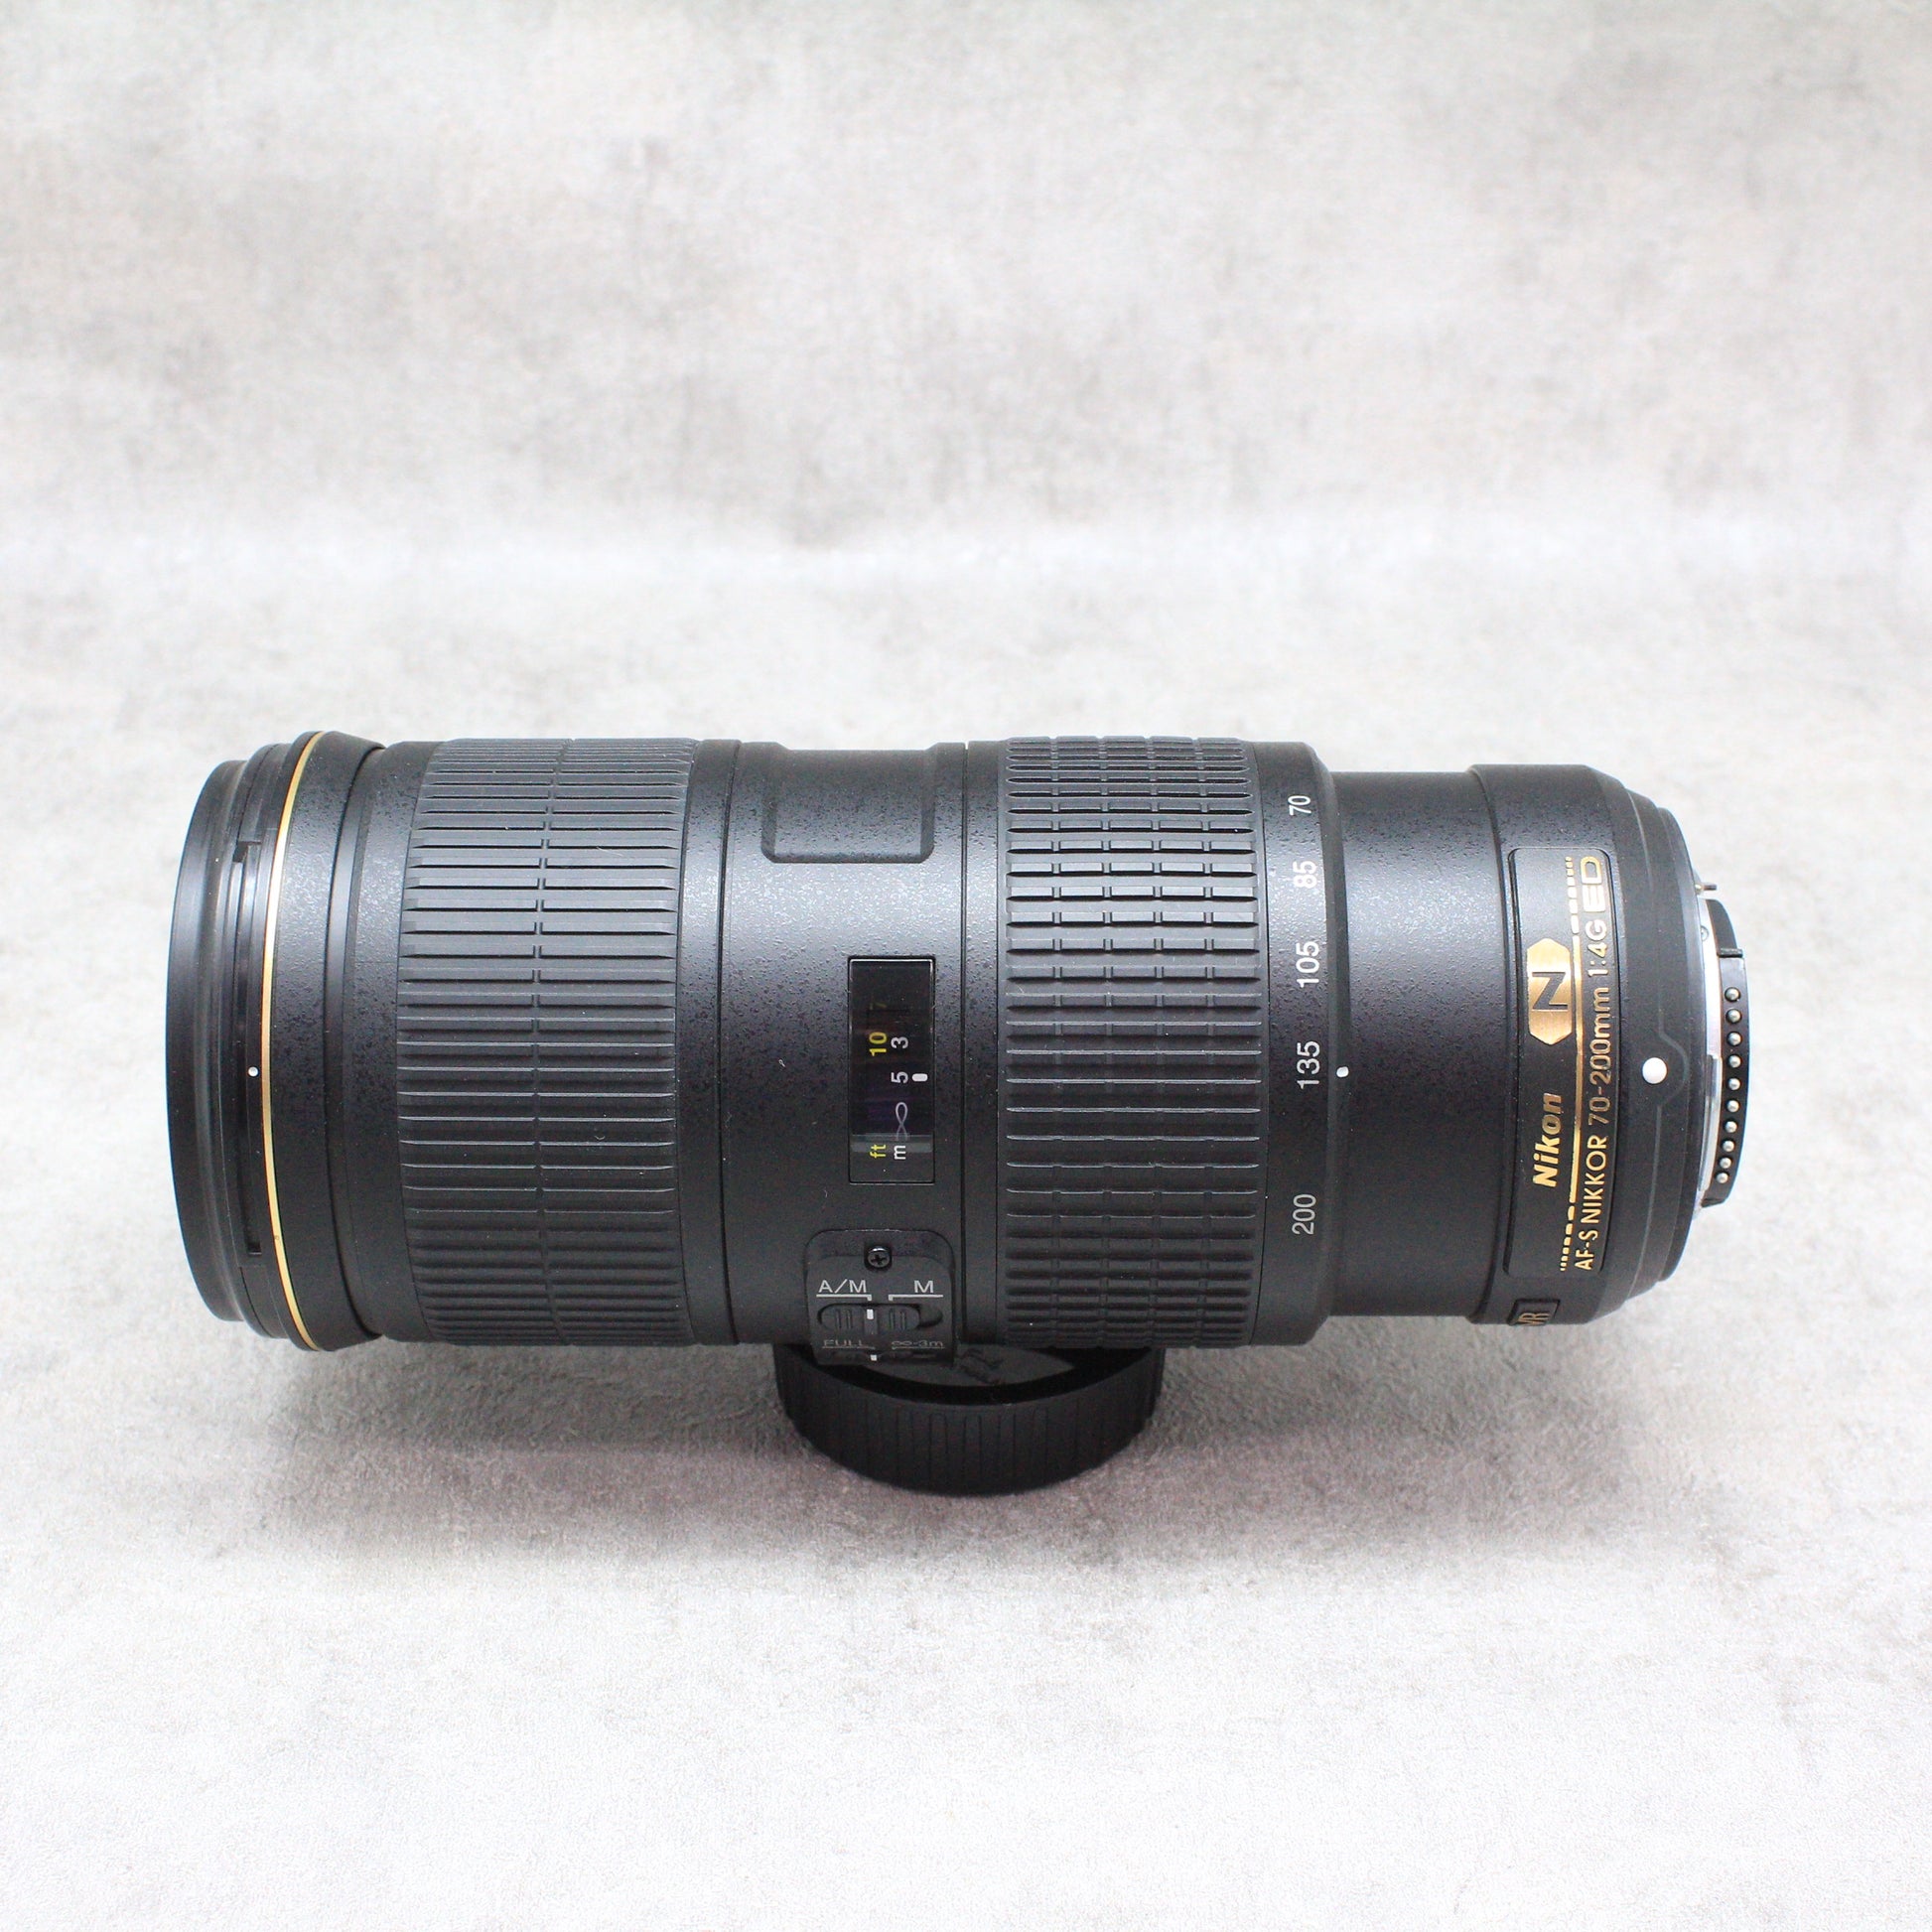 中古品 Nikon AF-S 70-200mm F4 G ED VR【10月21日(土) youtube生配信でご紹介】